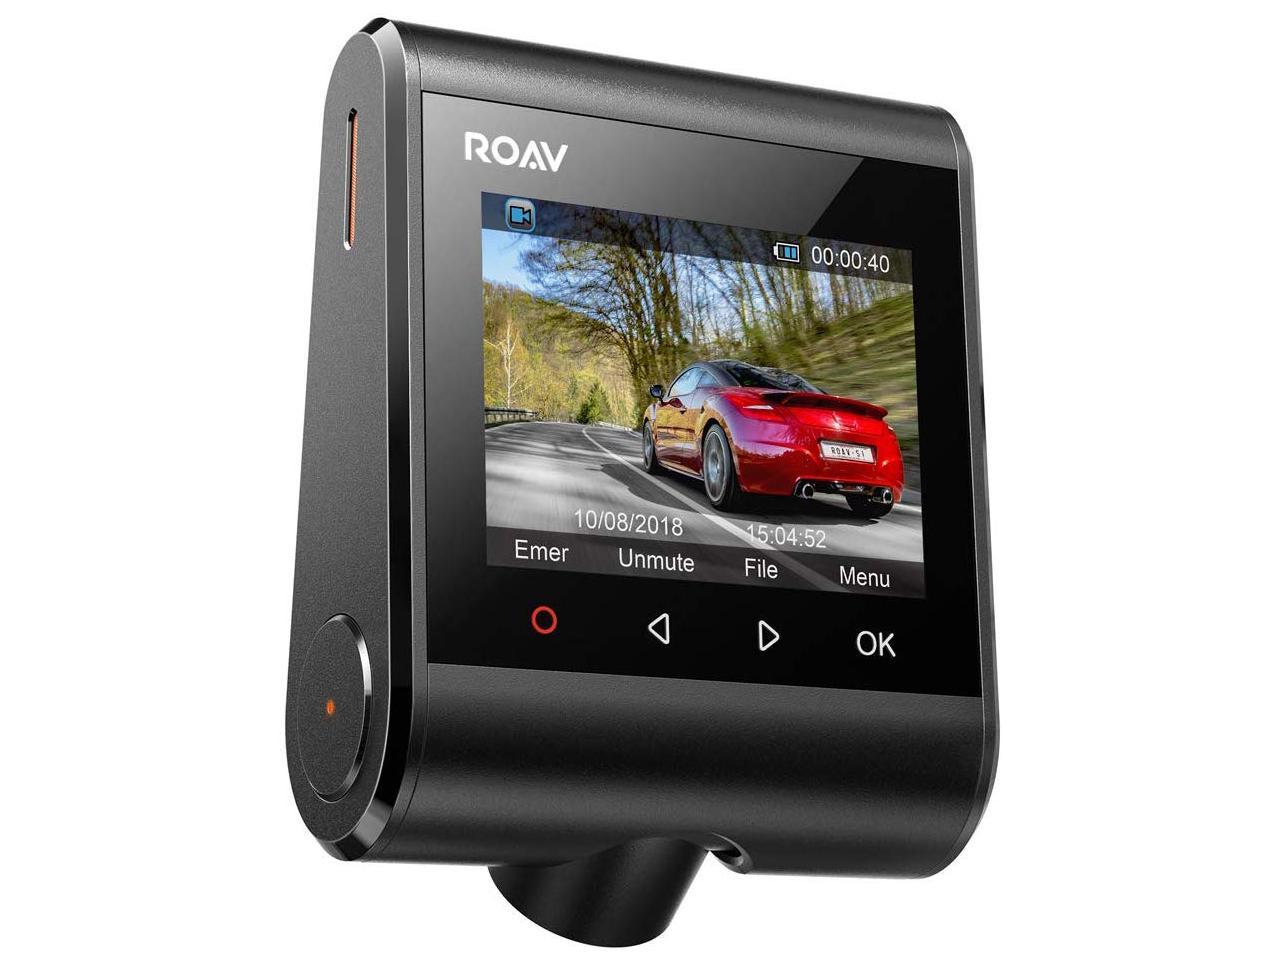 Anker Roav DashCam S1 Dashboard Camera for $49.99 w/ FS